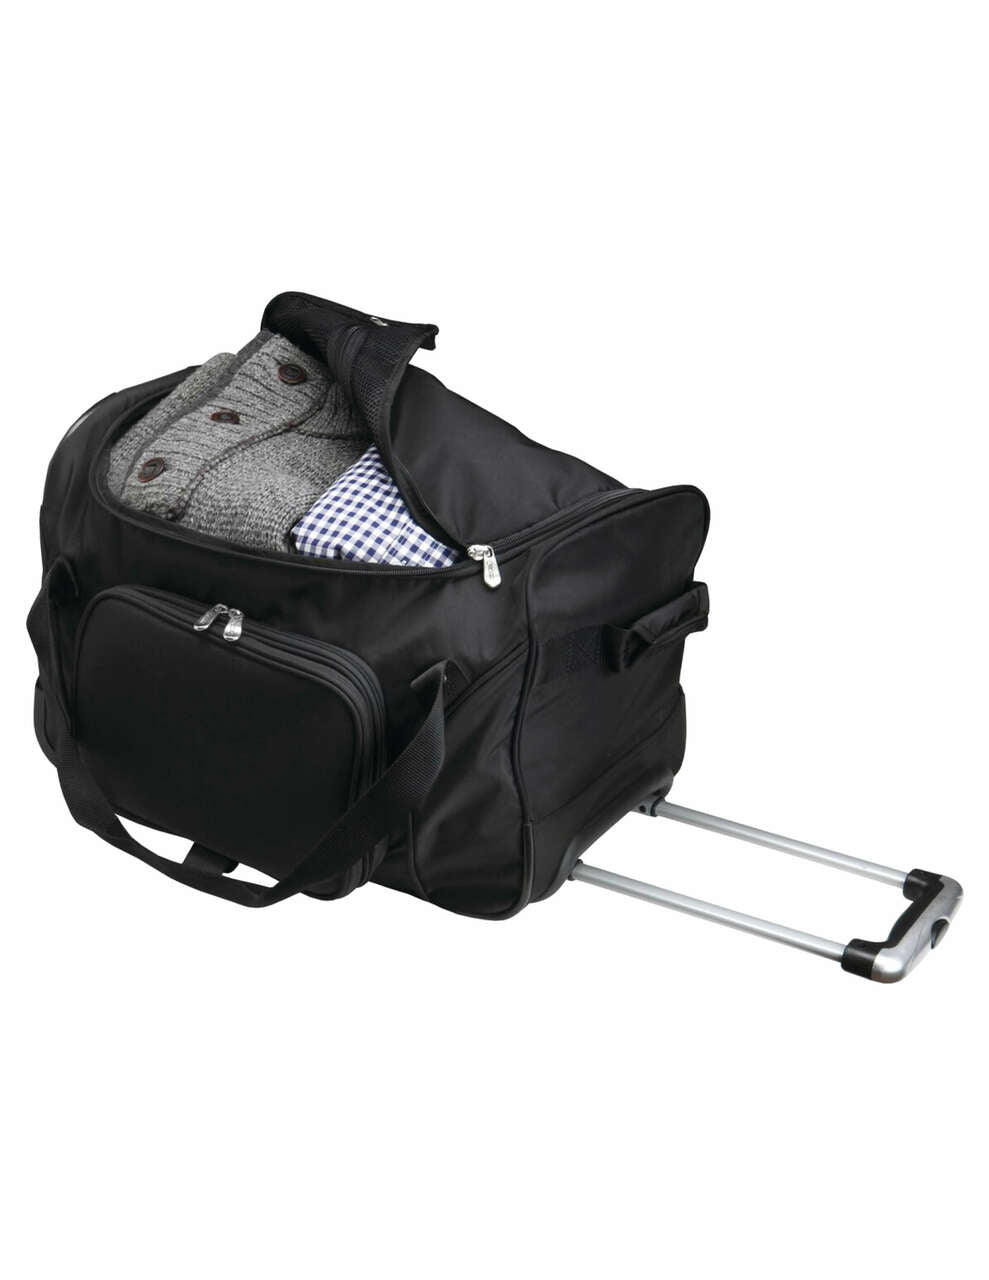 Auburn Tigers Luggage | Auburn Tigers Wheeled Carry On Luggage